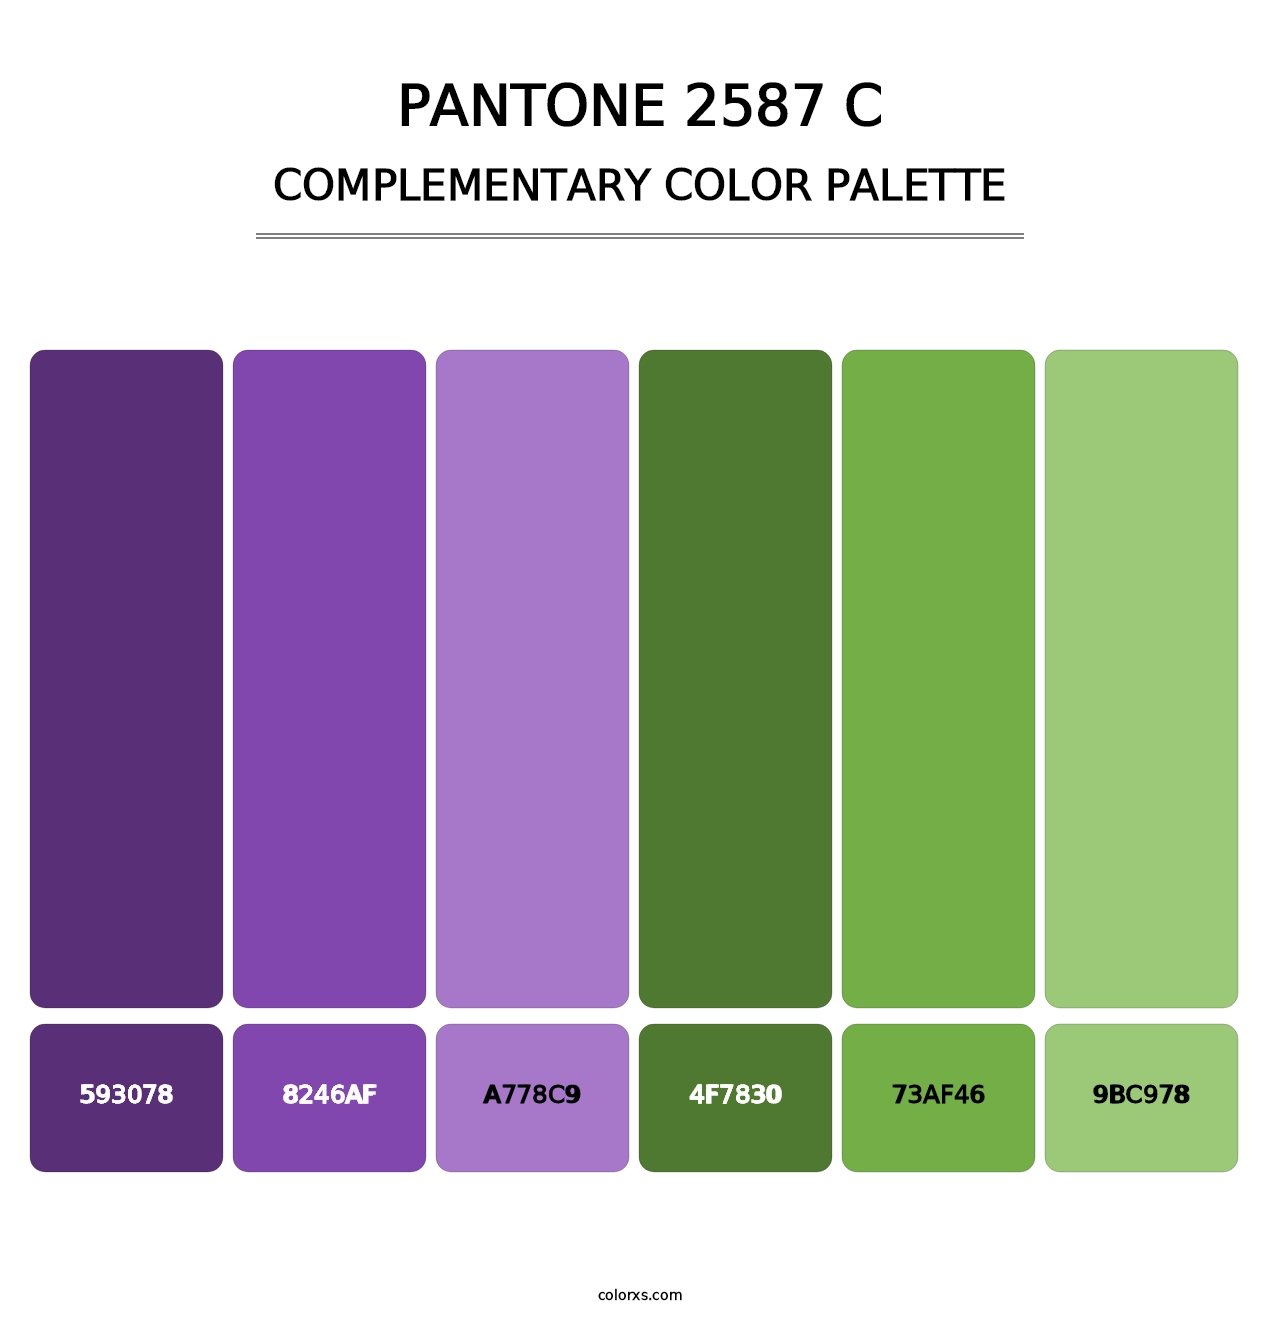 PANTONE 2587 C - Complementary Color Palette